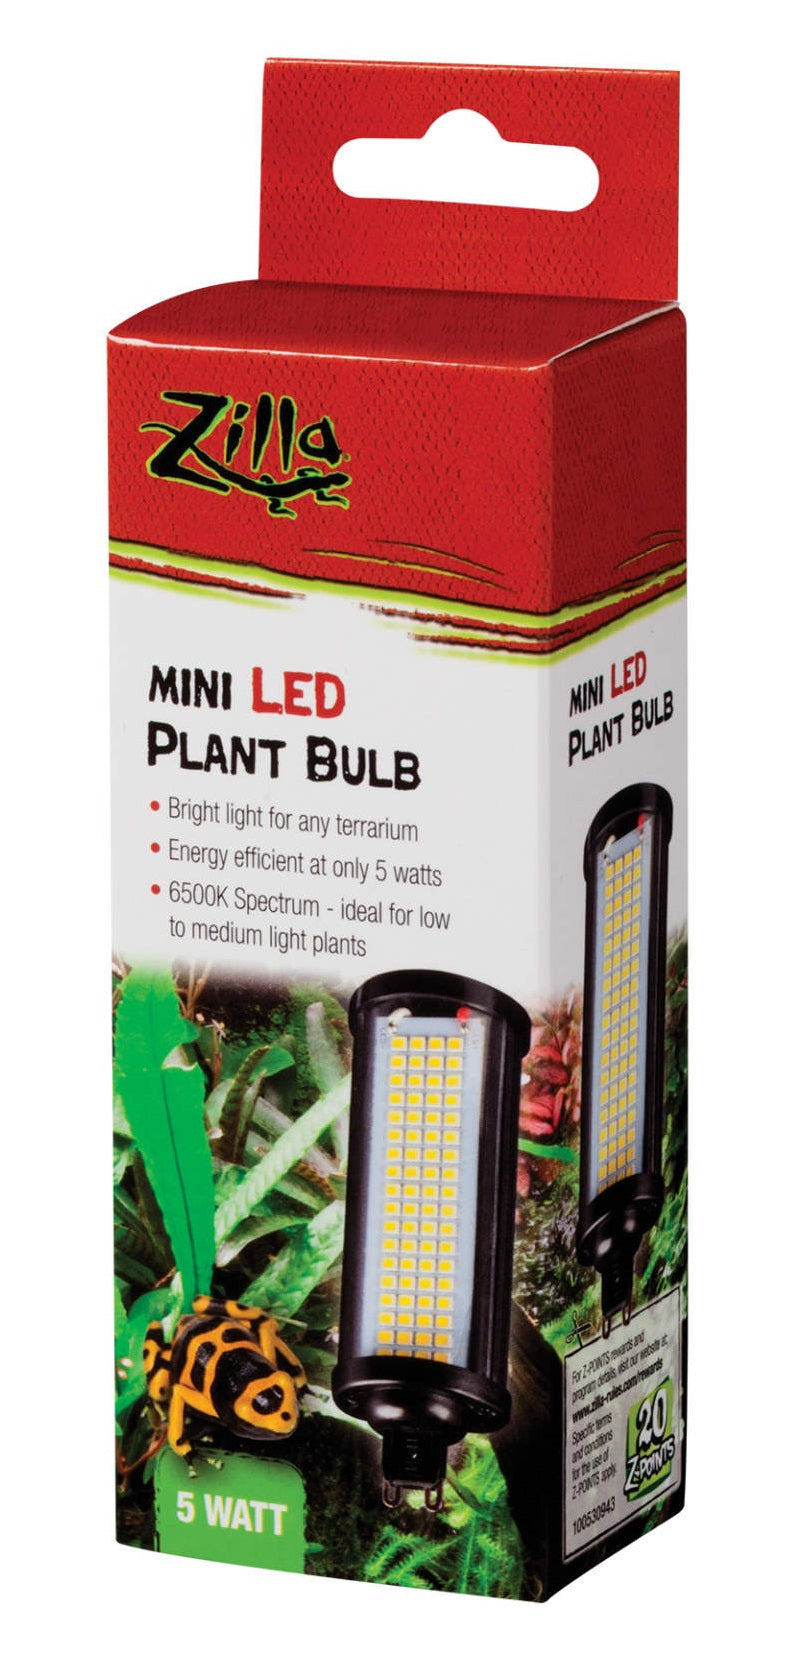 Zilla Mini LED Plant Bulb 6500K fro Low to Medium Light Plants in Terrariums - PetMountain.com